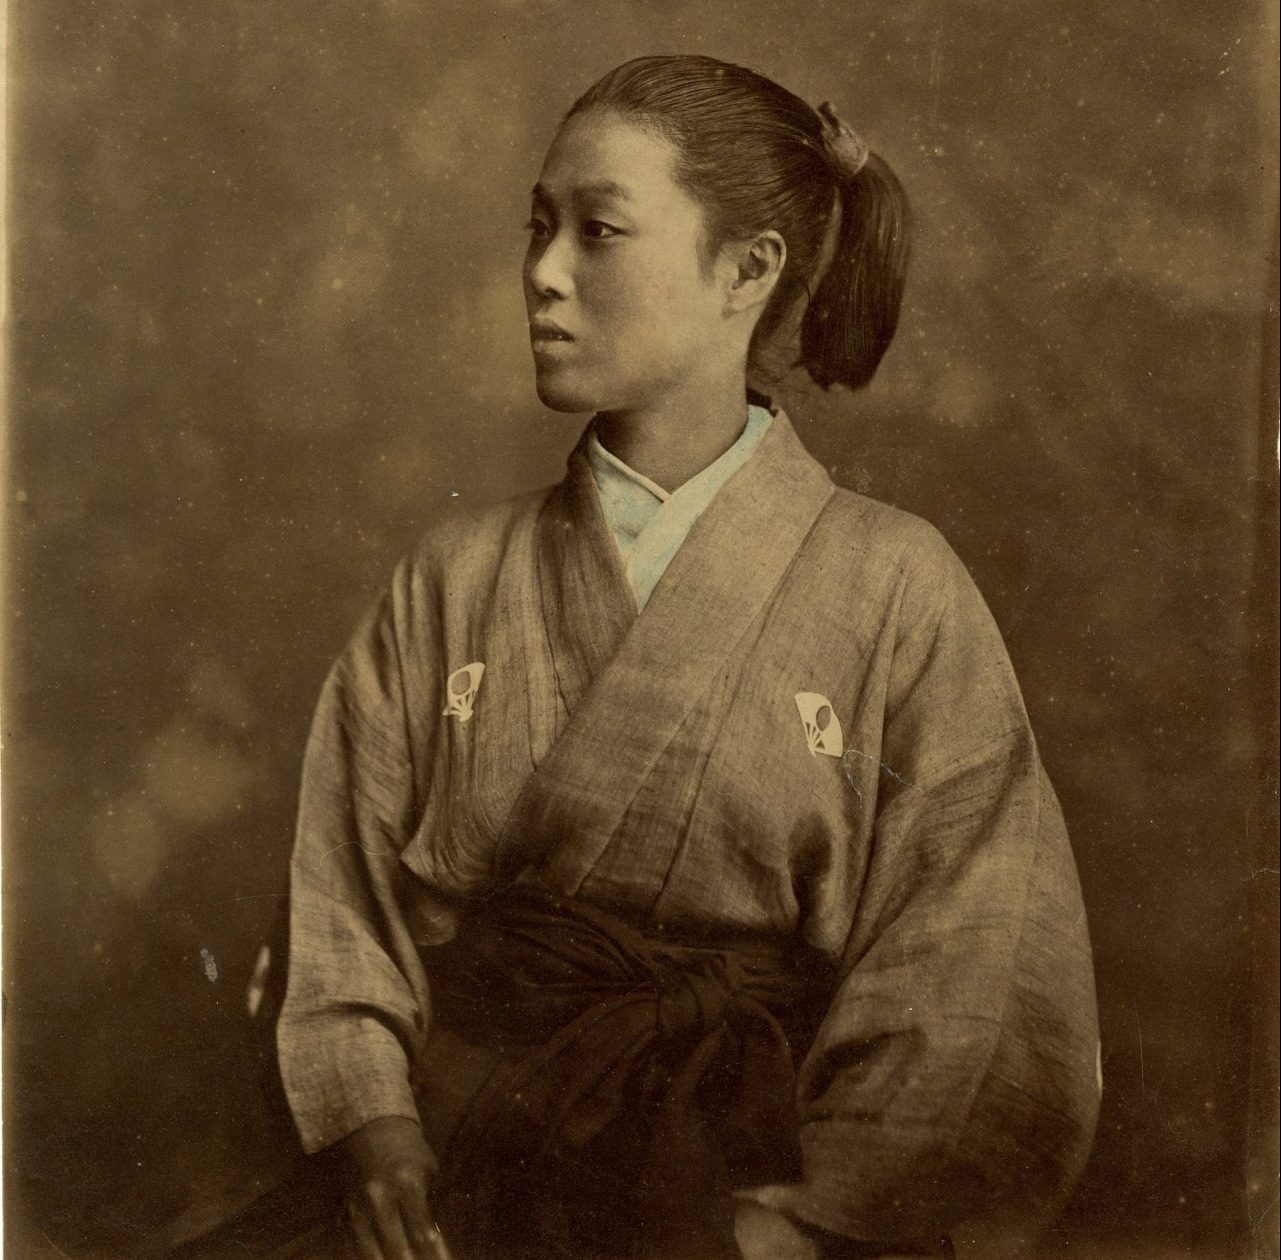 woman samurai in a fencing gear